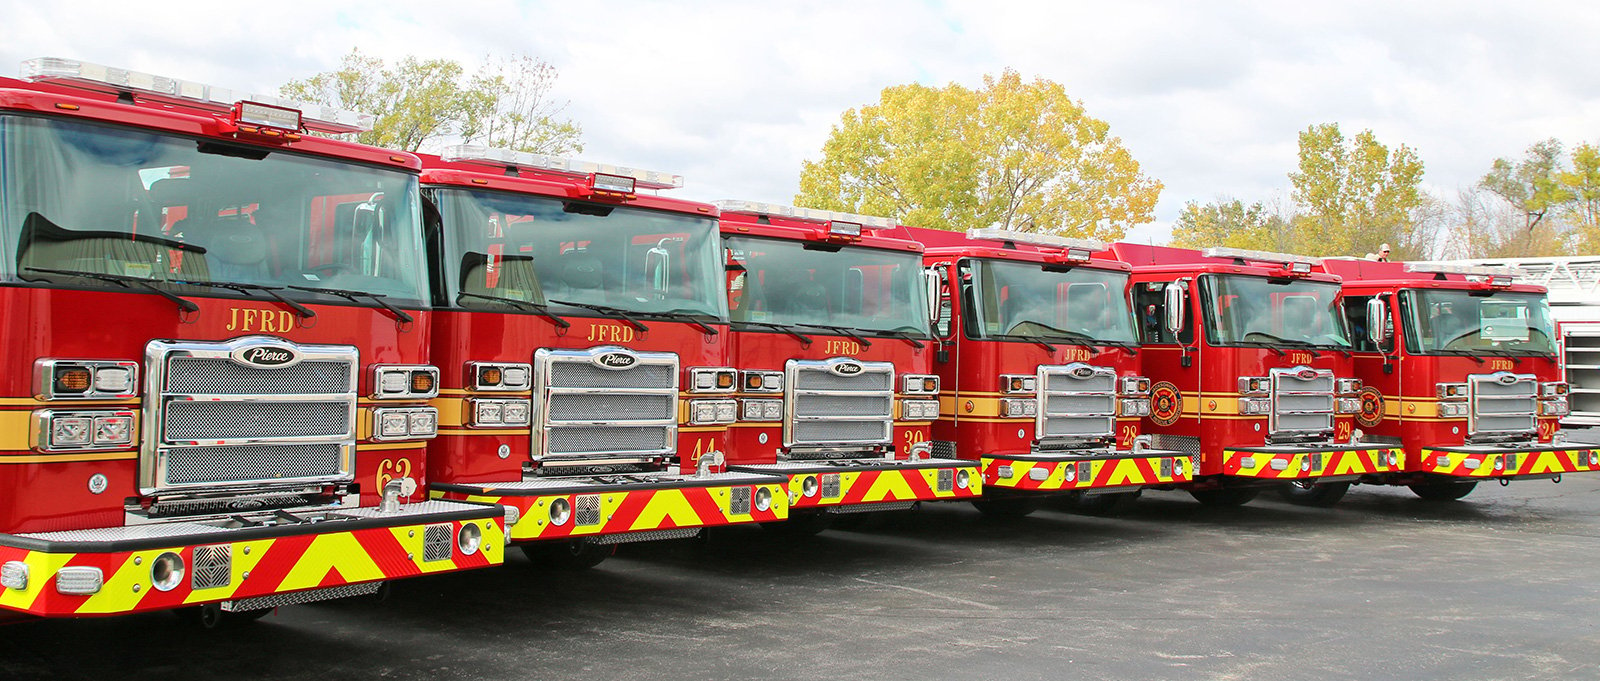 Company Two Fire Used Rescue Trucks